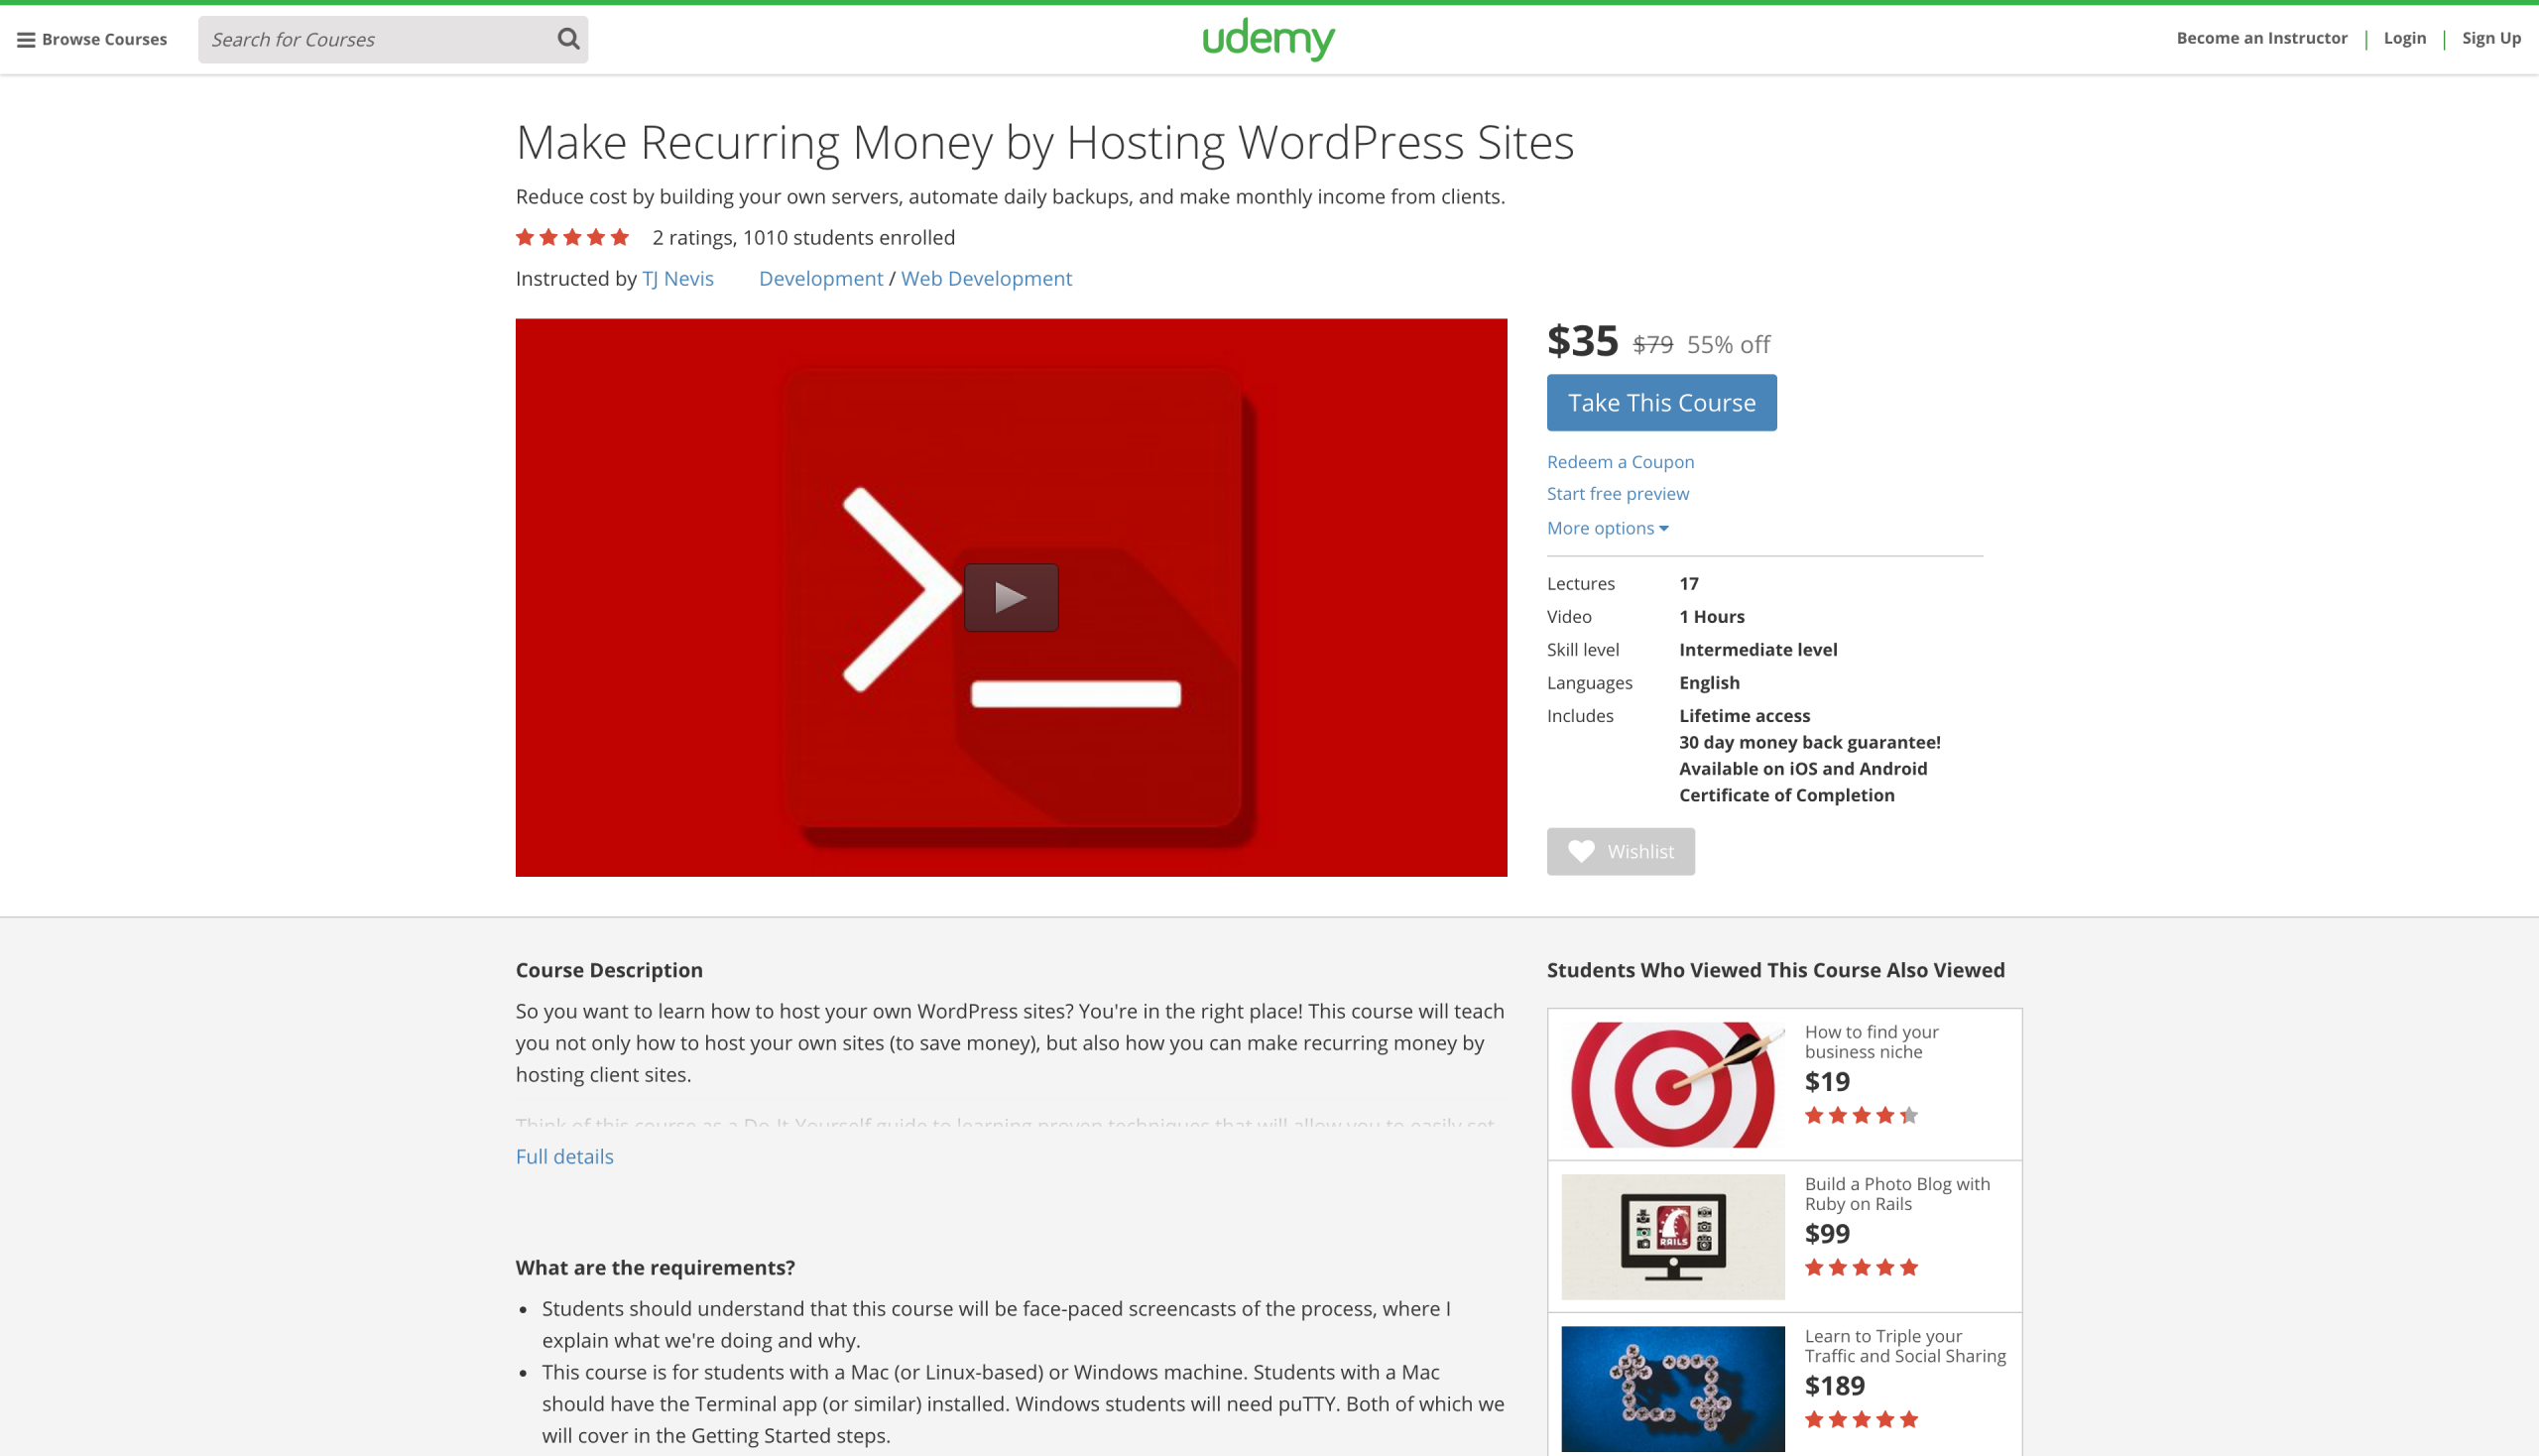 Make Recurring Money by Hosting WordPress Sites on Udemy